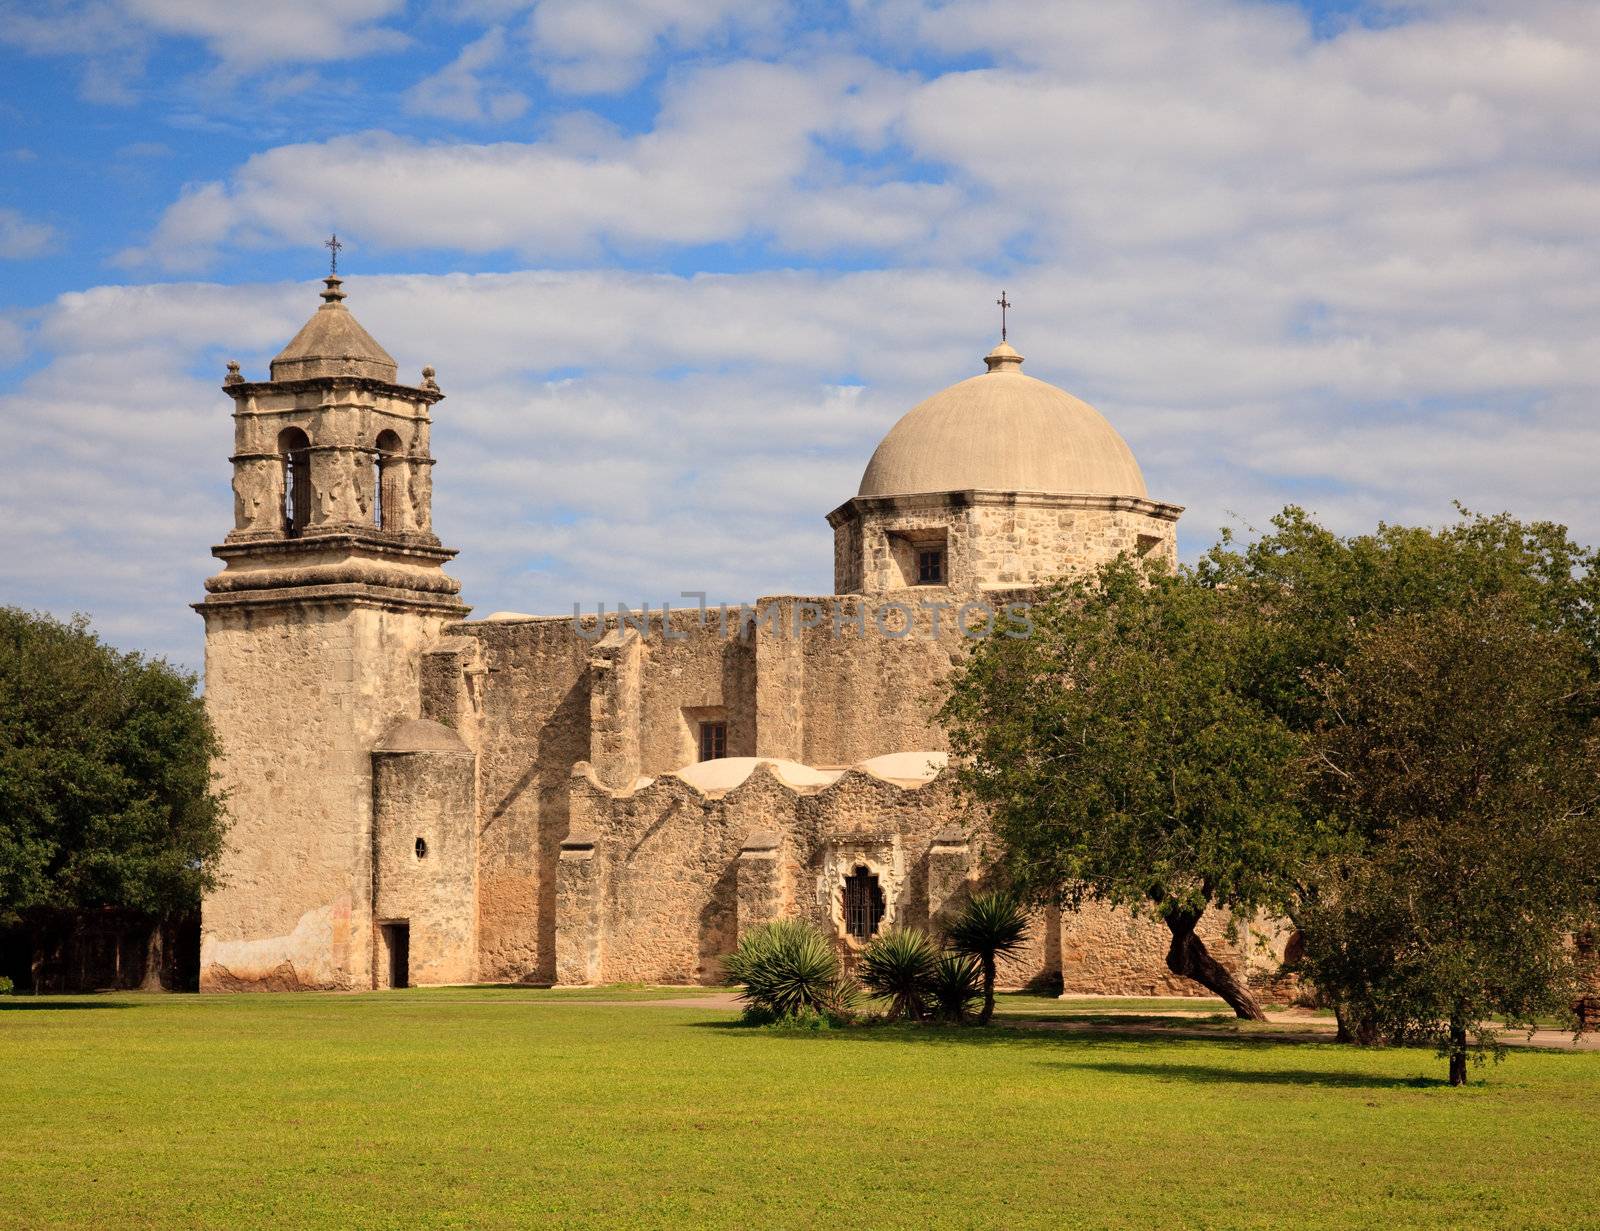 San Antonio Mission San Juan in Texas by steheap